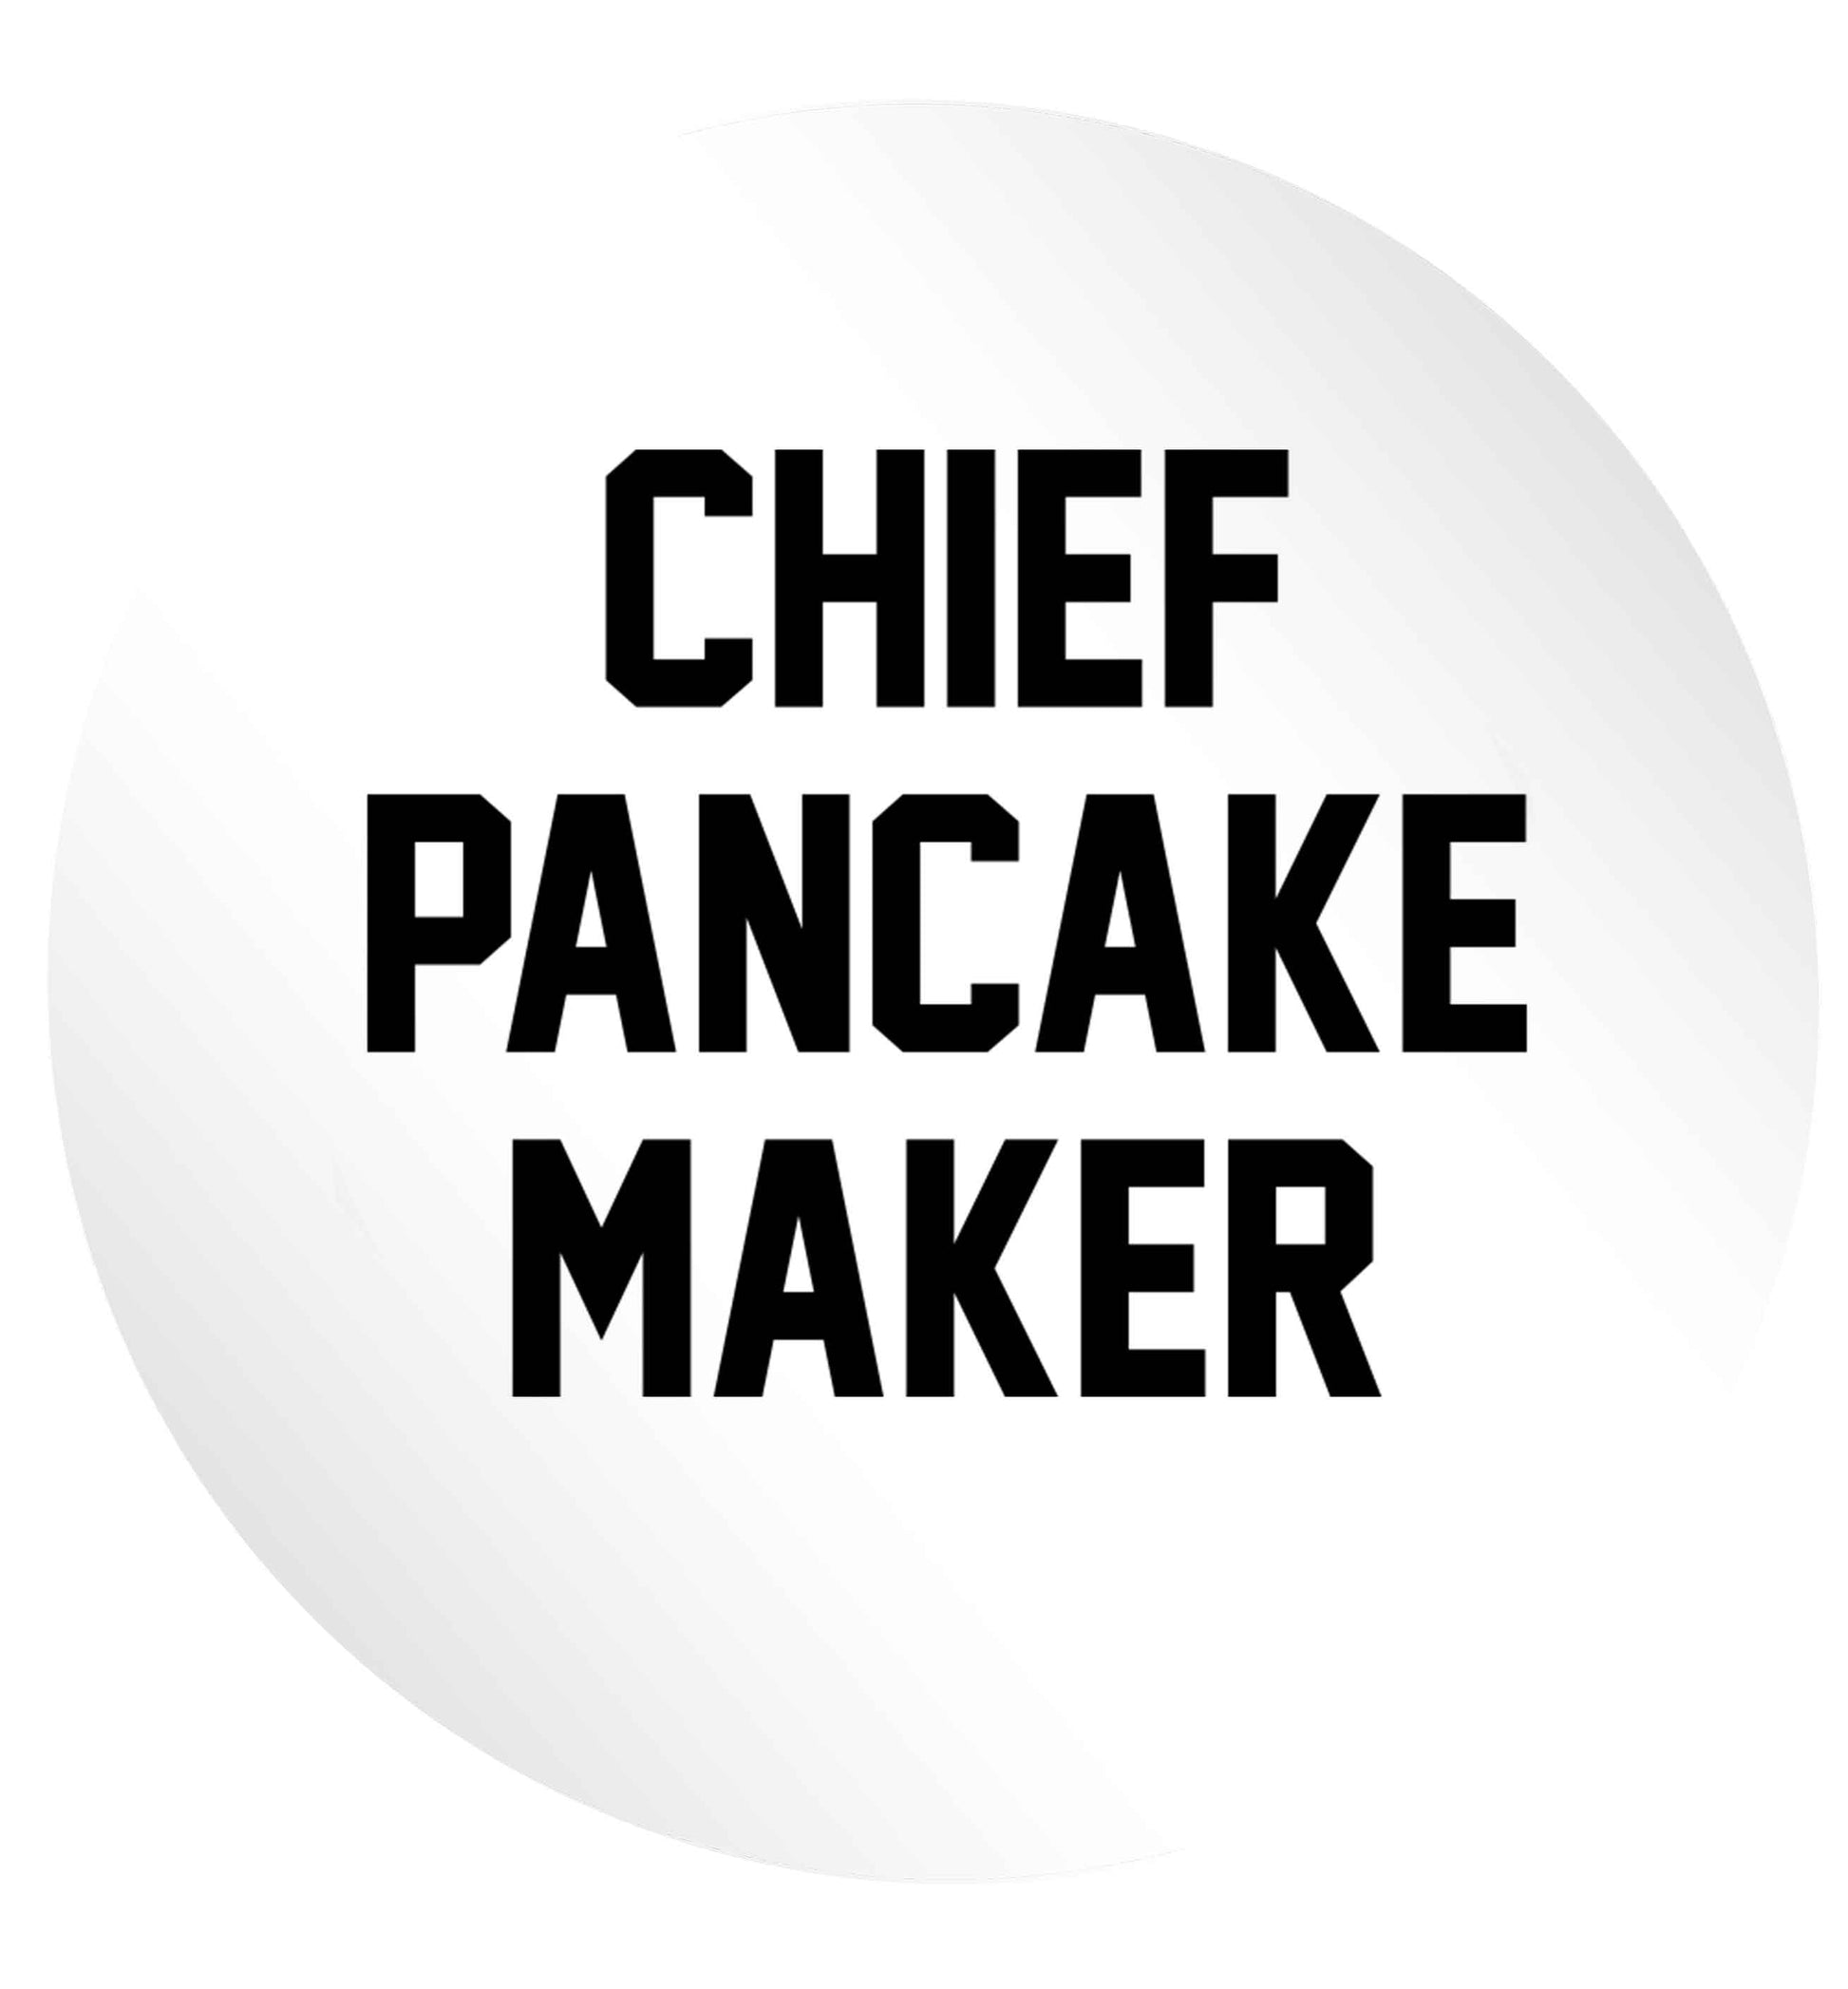 Chief pancake maker 24 @ 45mm matt circle stickers